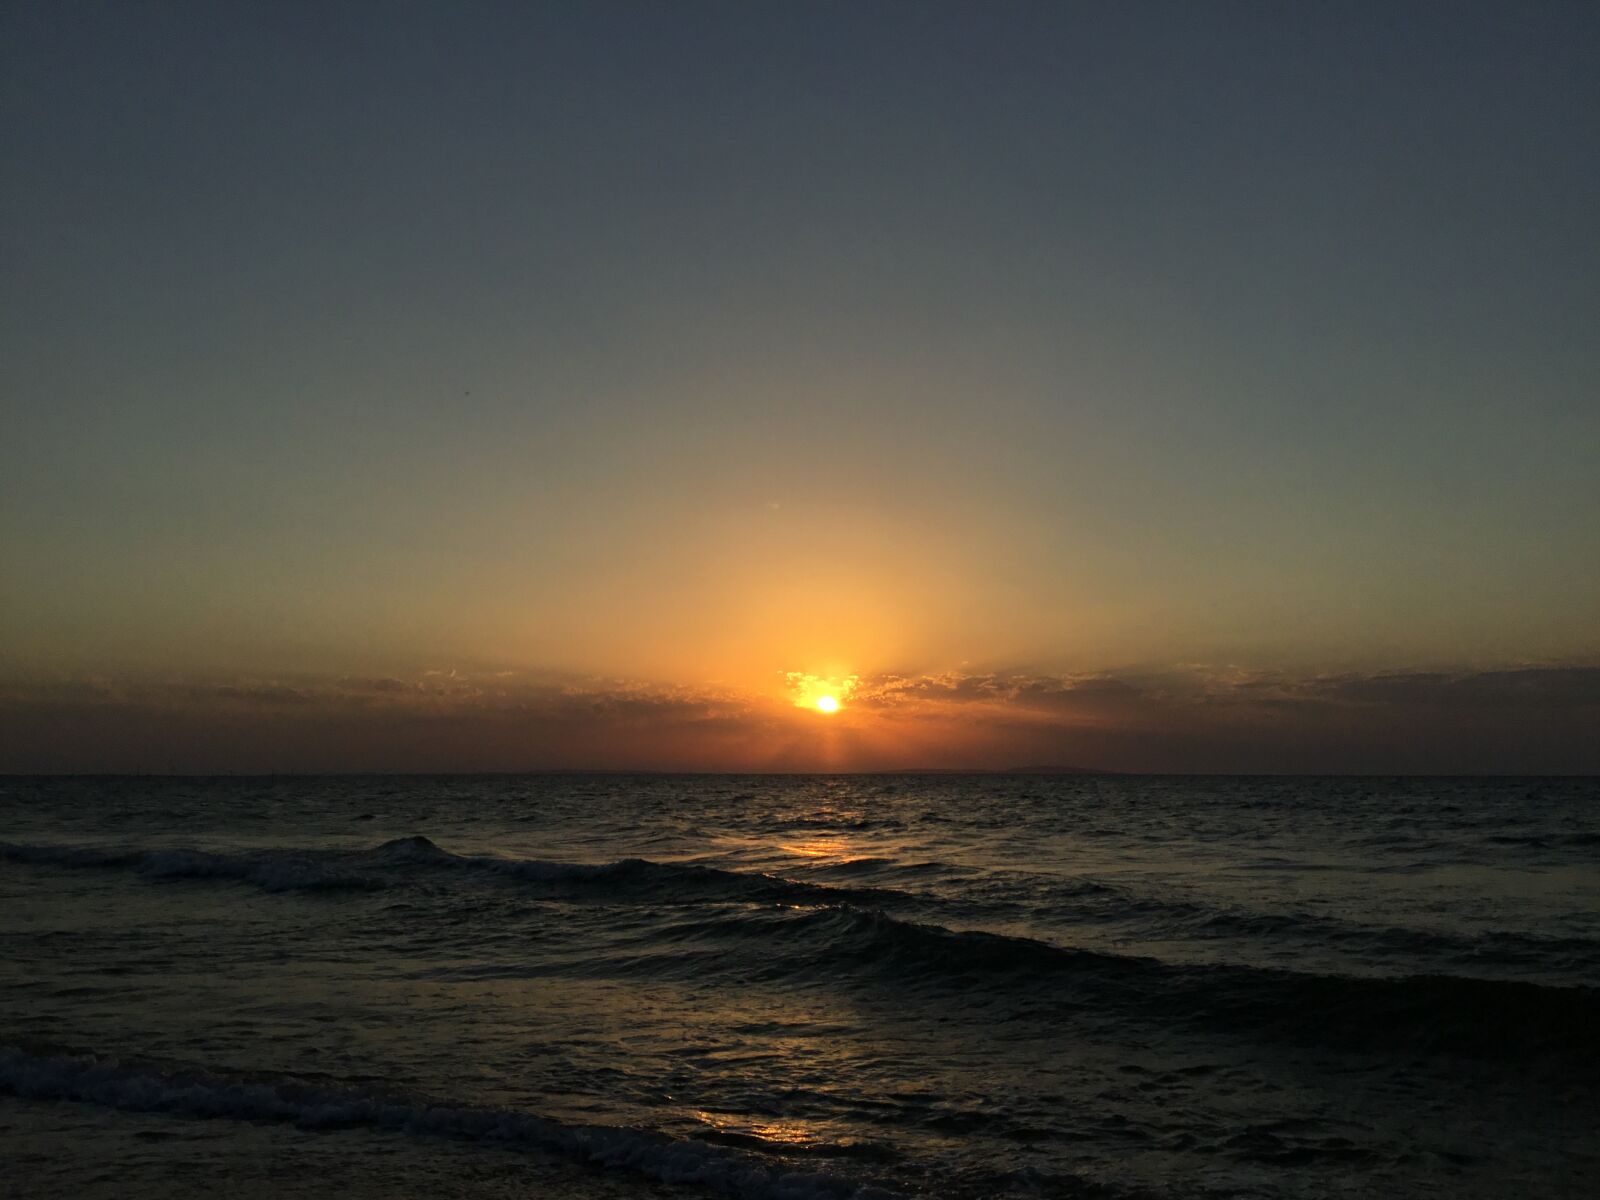 Apple iPad + iPad back camera 3.3mm f/2.4 sample photo. Evening, sea, sky, sunset photography